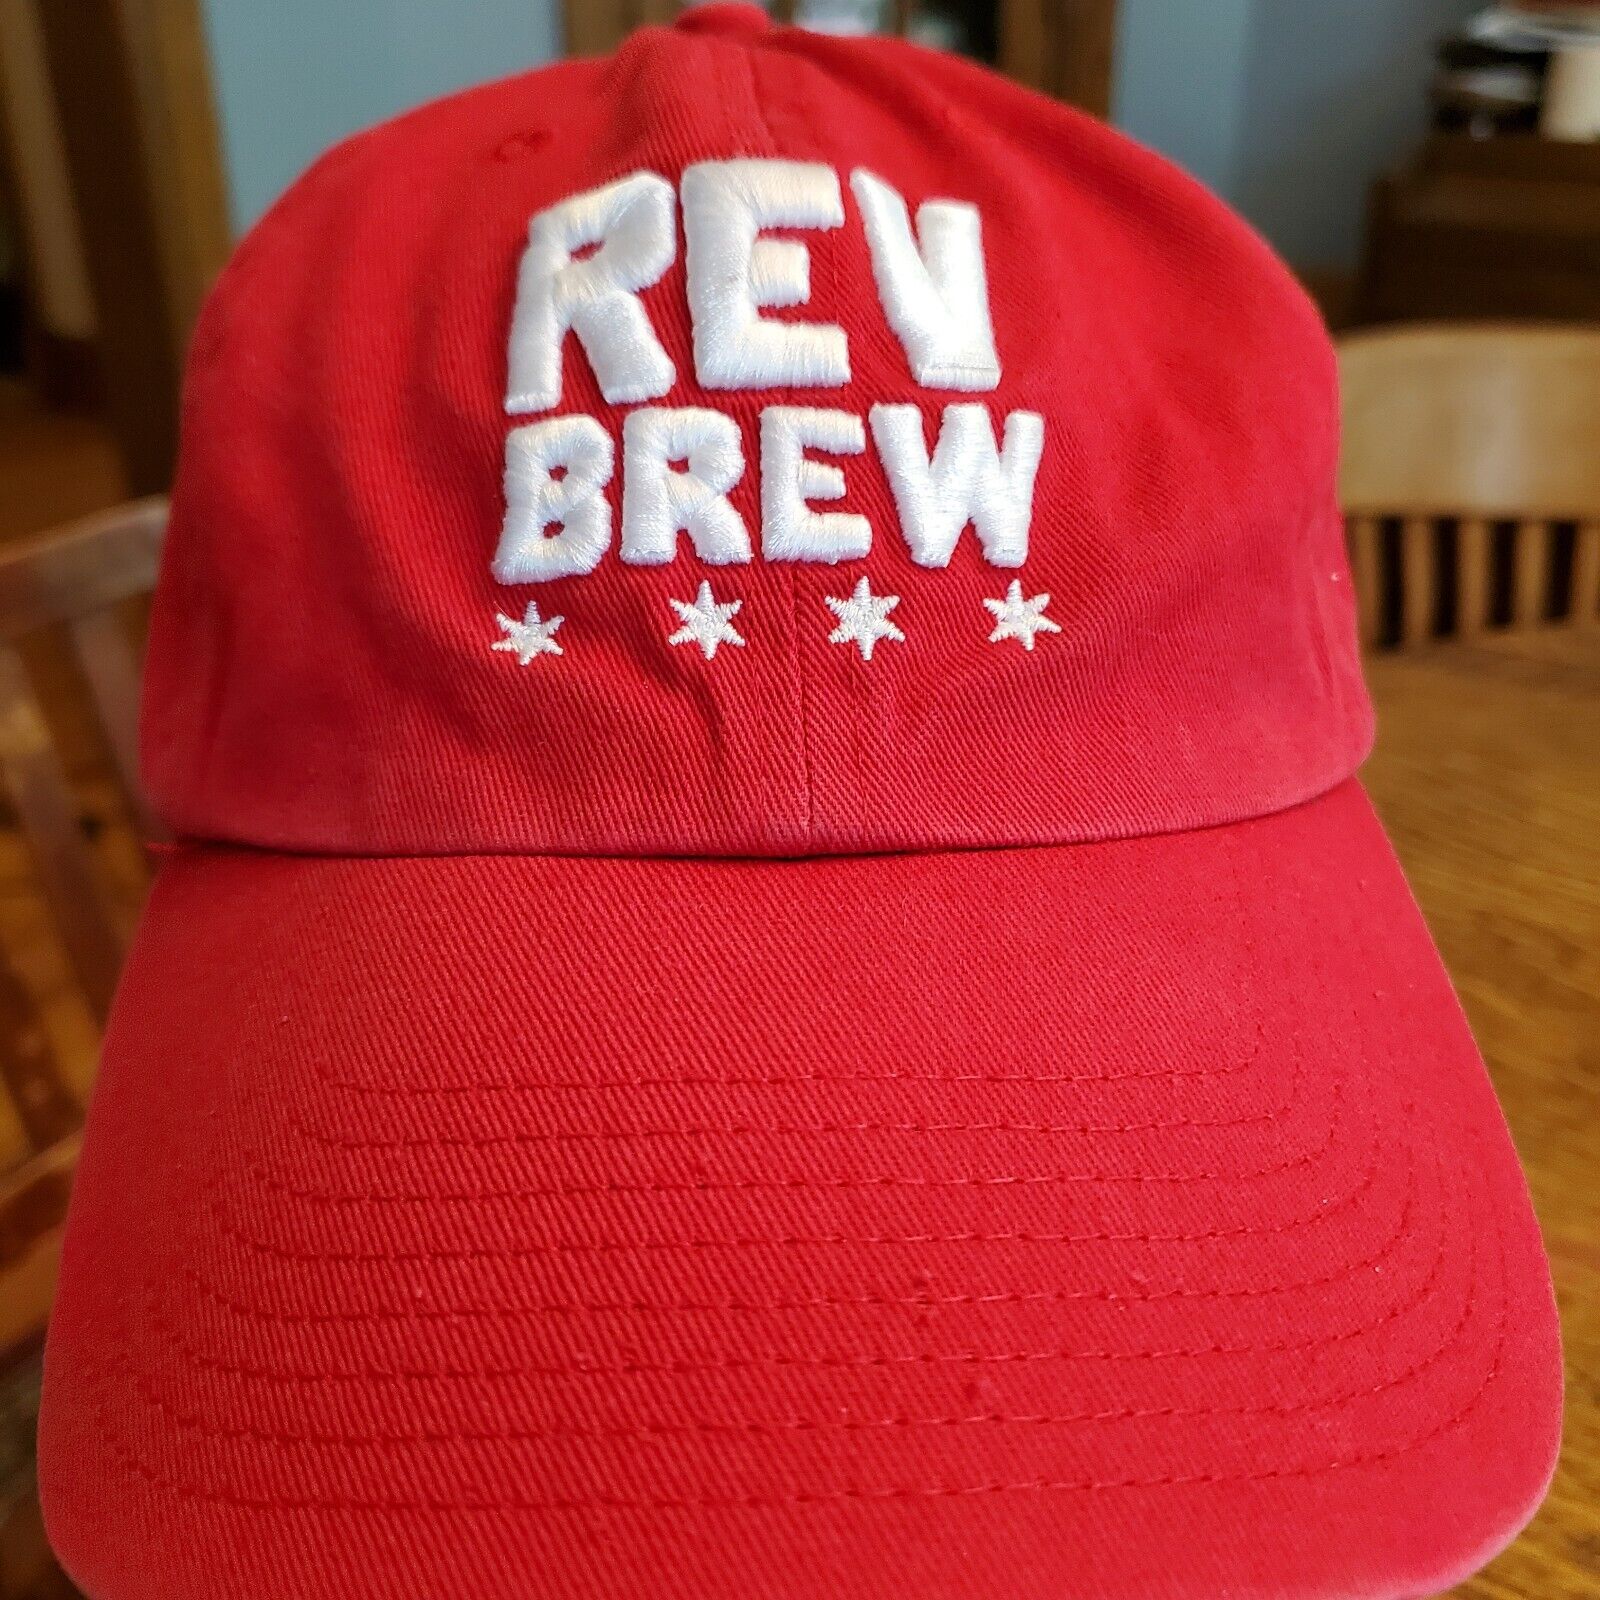 Revolution Brewing Rev Brew Red Hat Chicago Craft Beer 47 Brand, Rare Design.